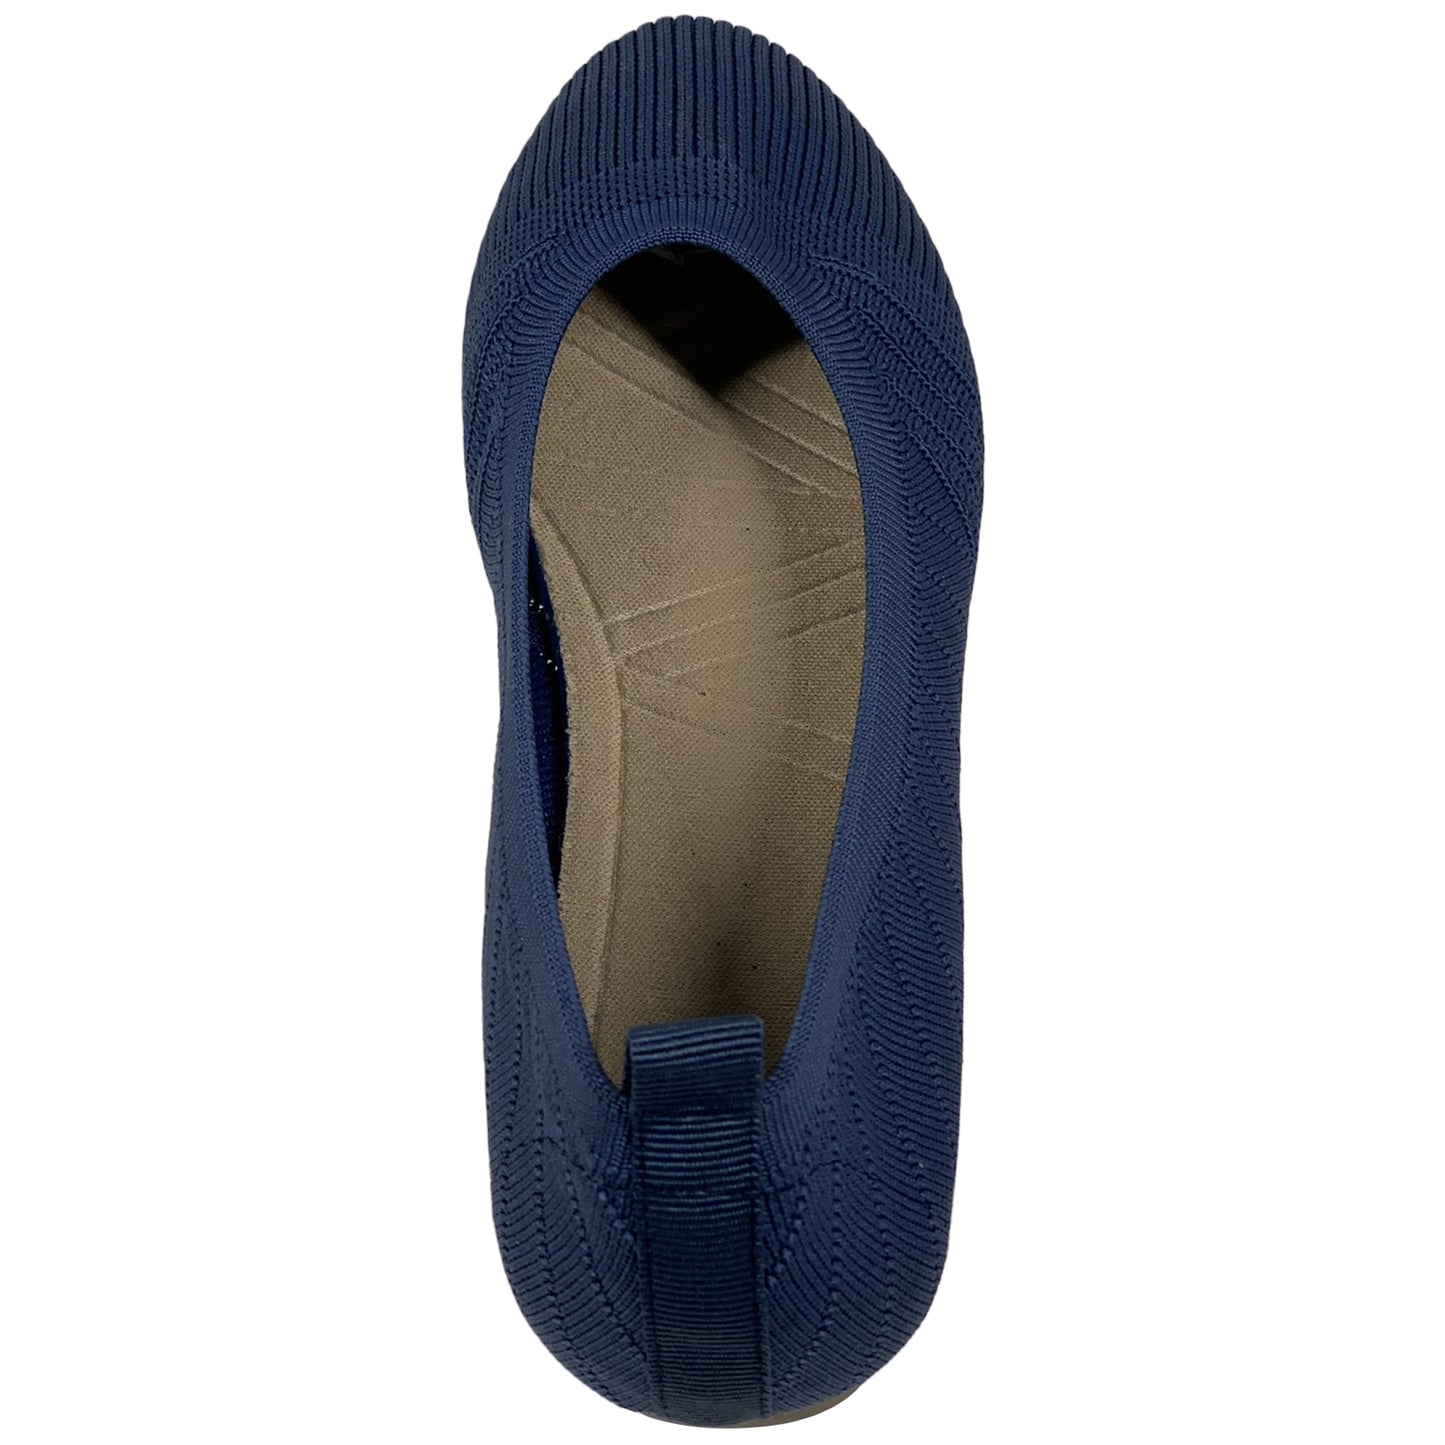 SOBEYO Sweater Round Toe Ballet Flats Soft Foldable Sole Blue